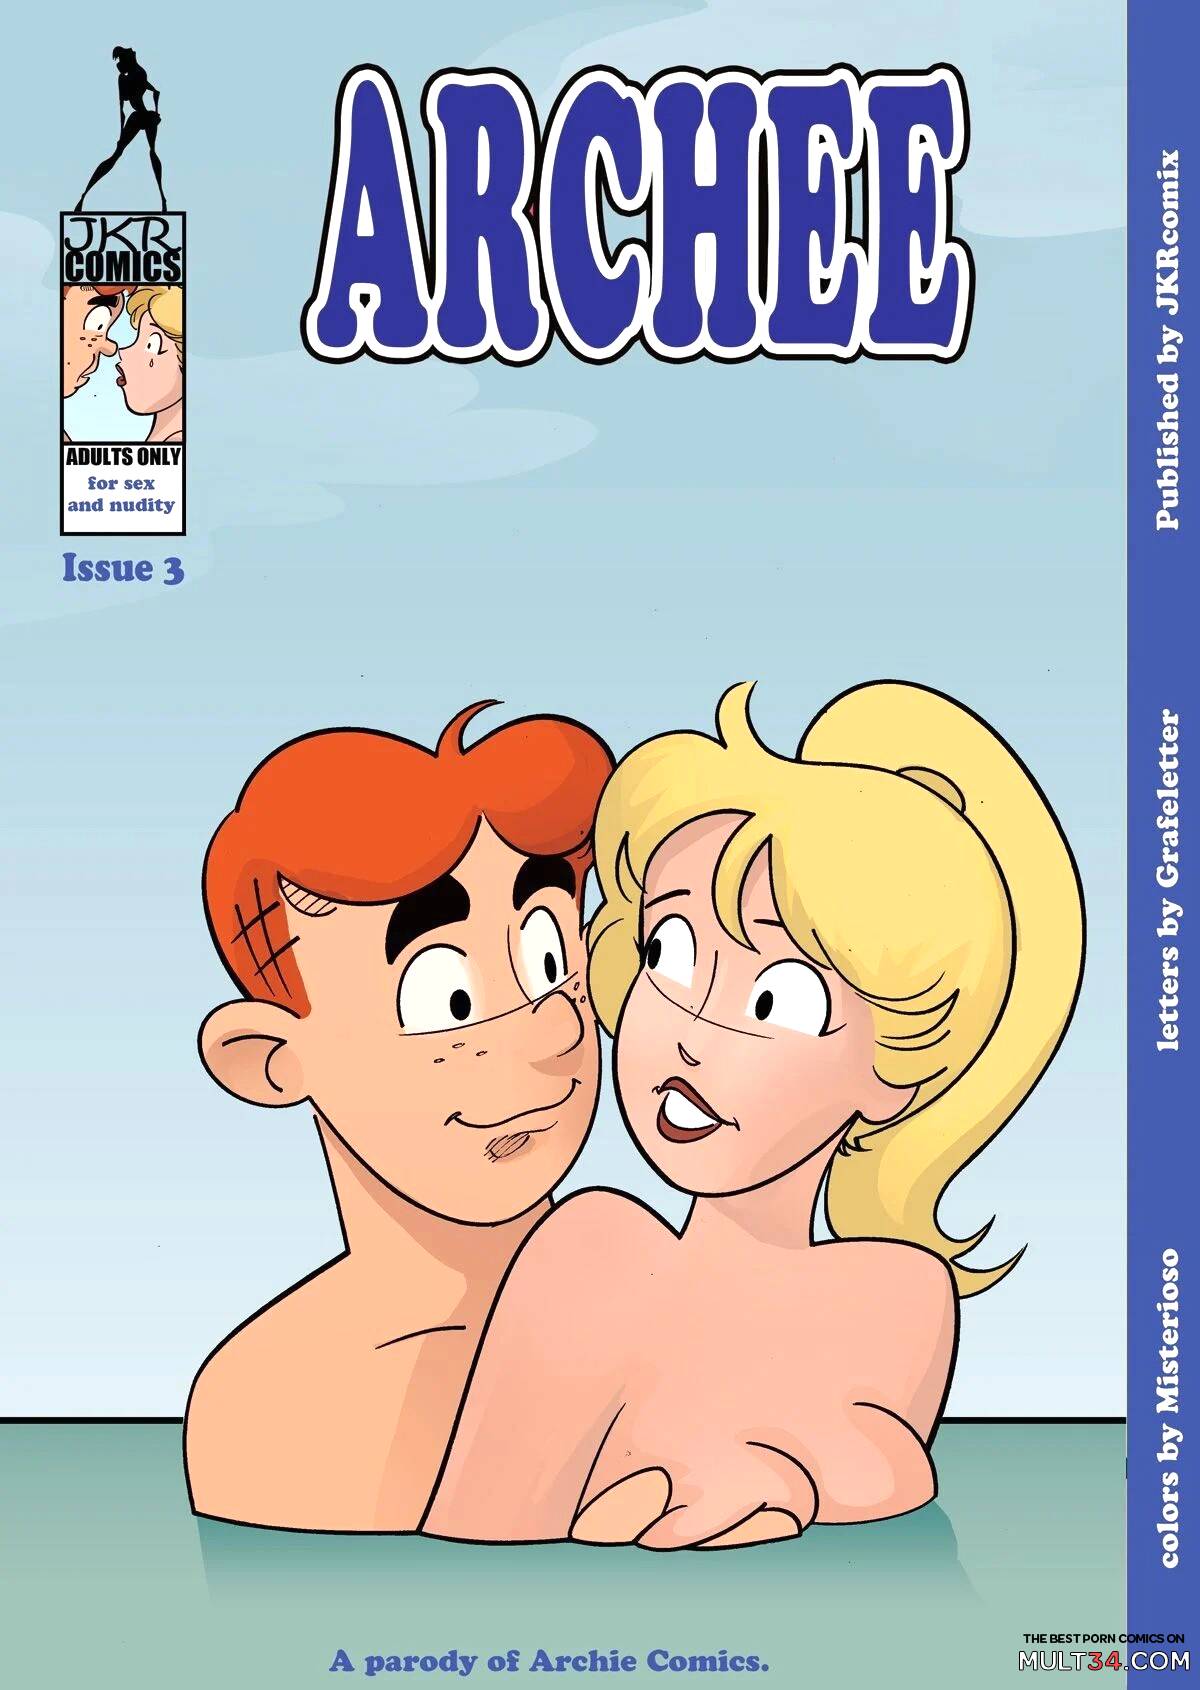 Graphic novel archies porn comics